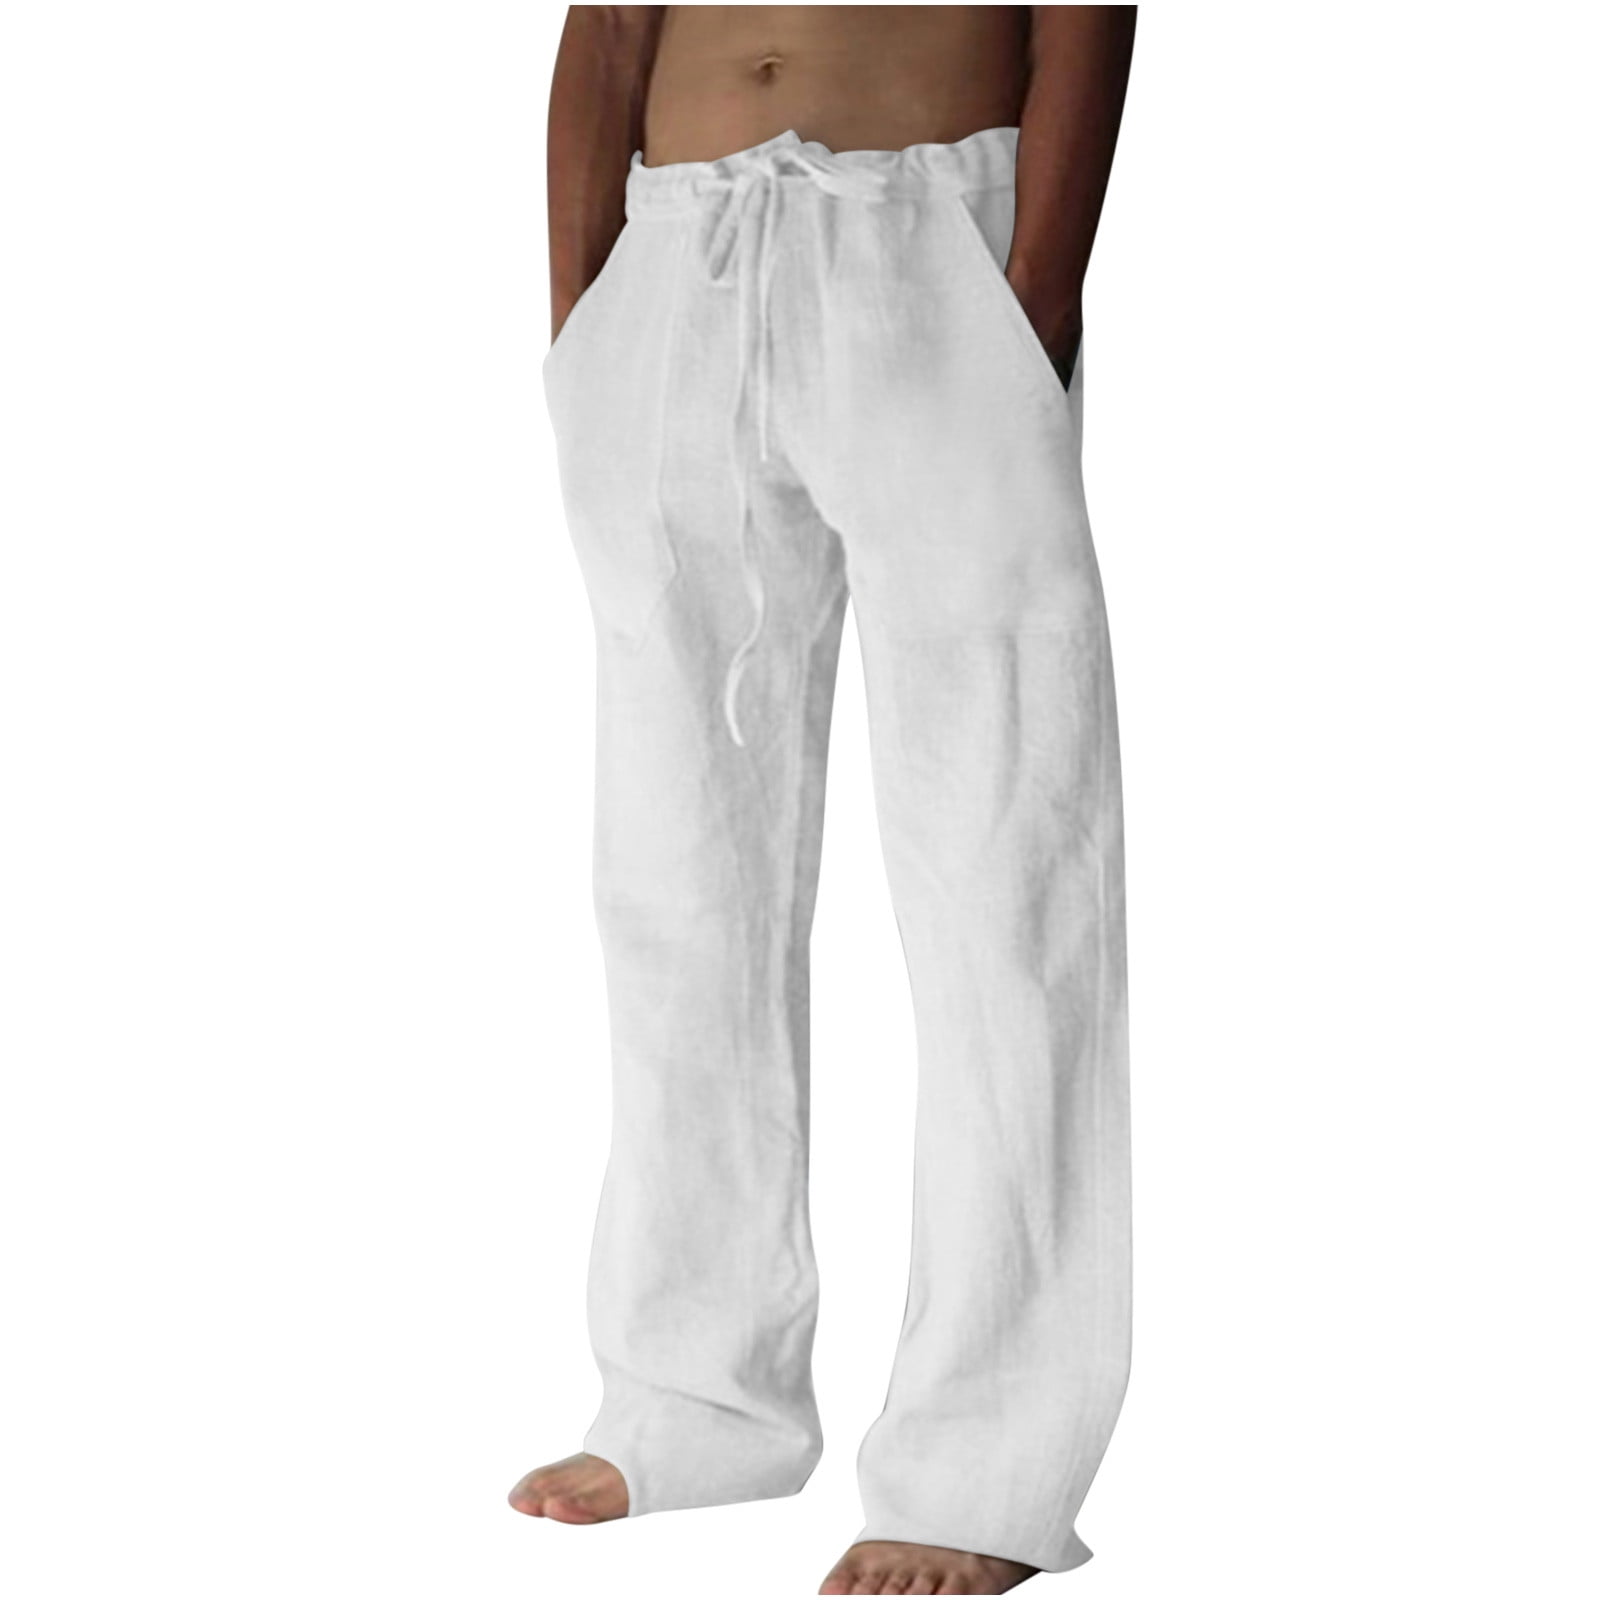 Men's Linen Cotton Loose Fit Casual Lightweight Elastic Waist Summer Beach  Pants White L